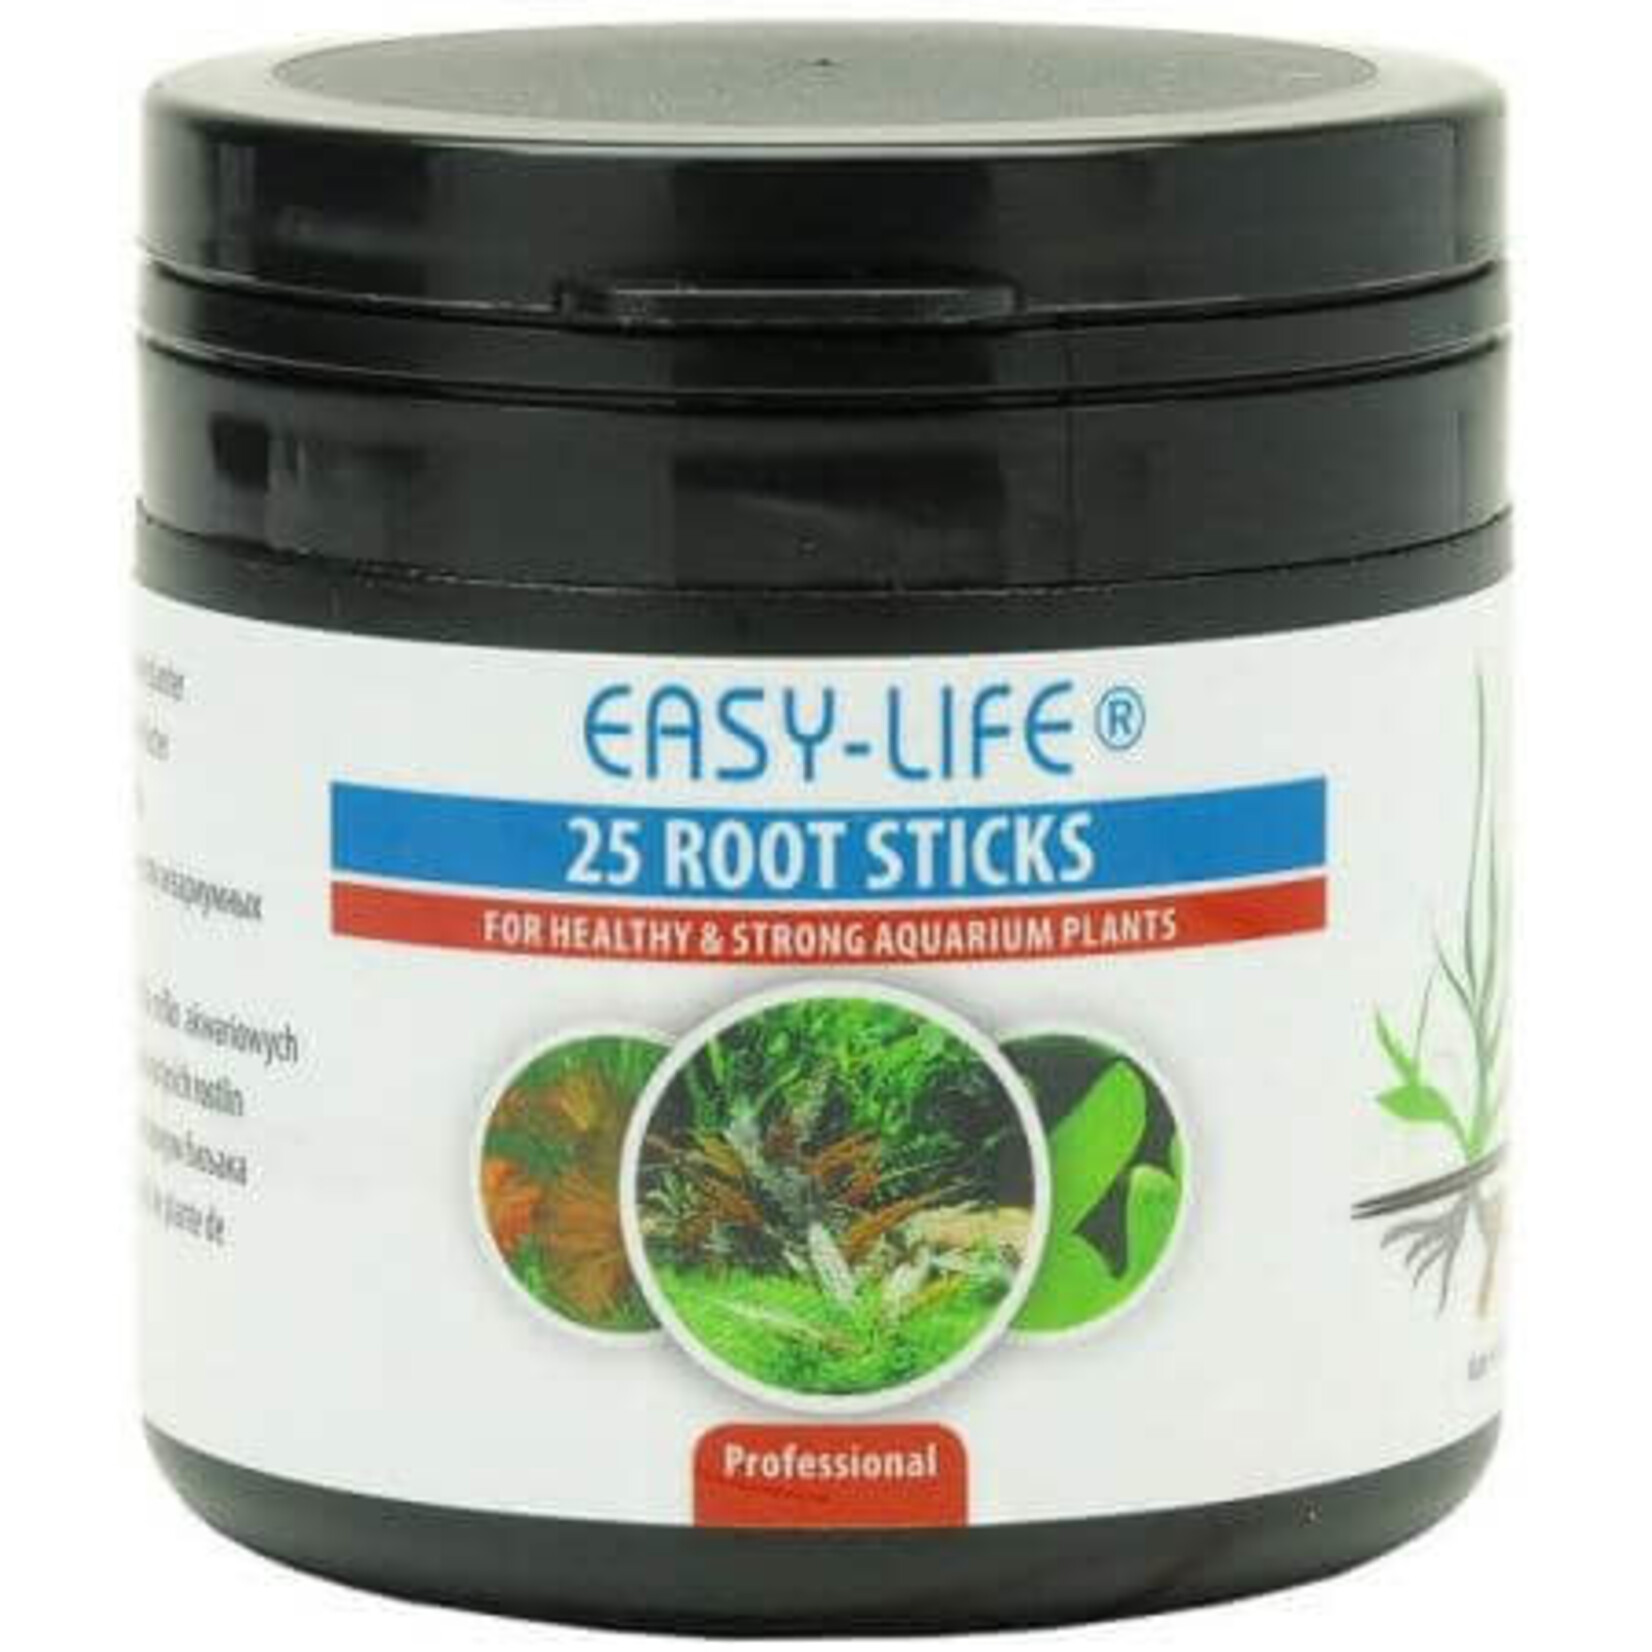 Easy Life Easylife Root sticks (25 sticks per pot)